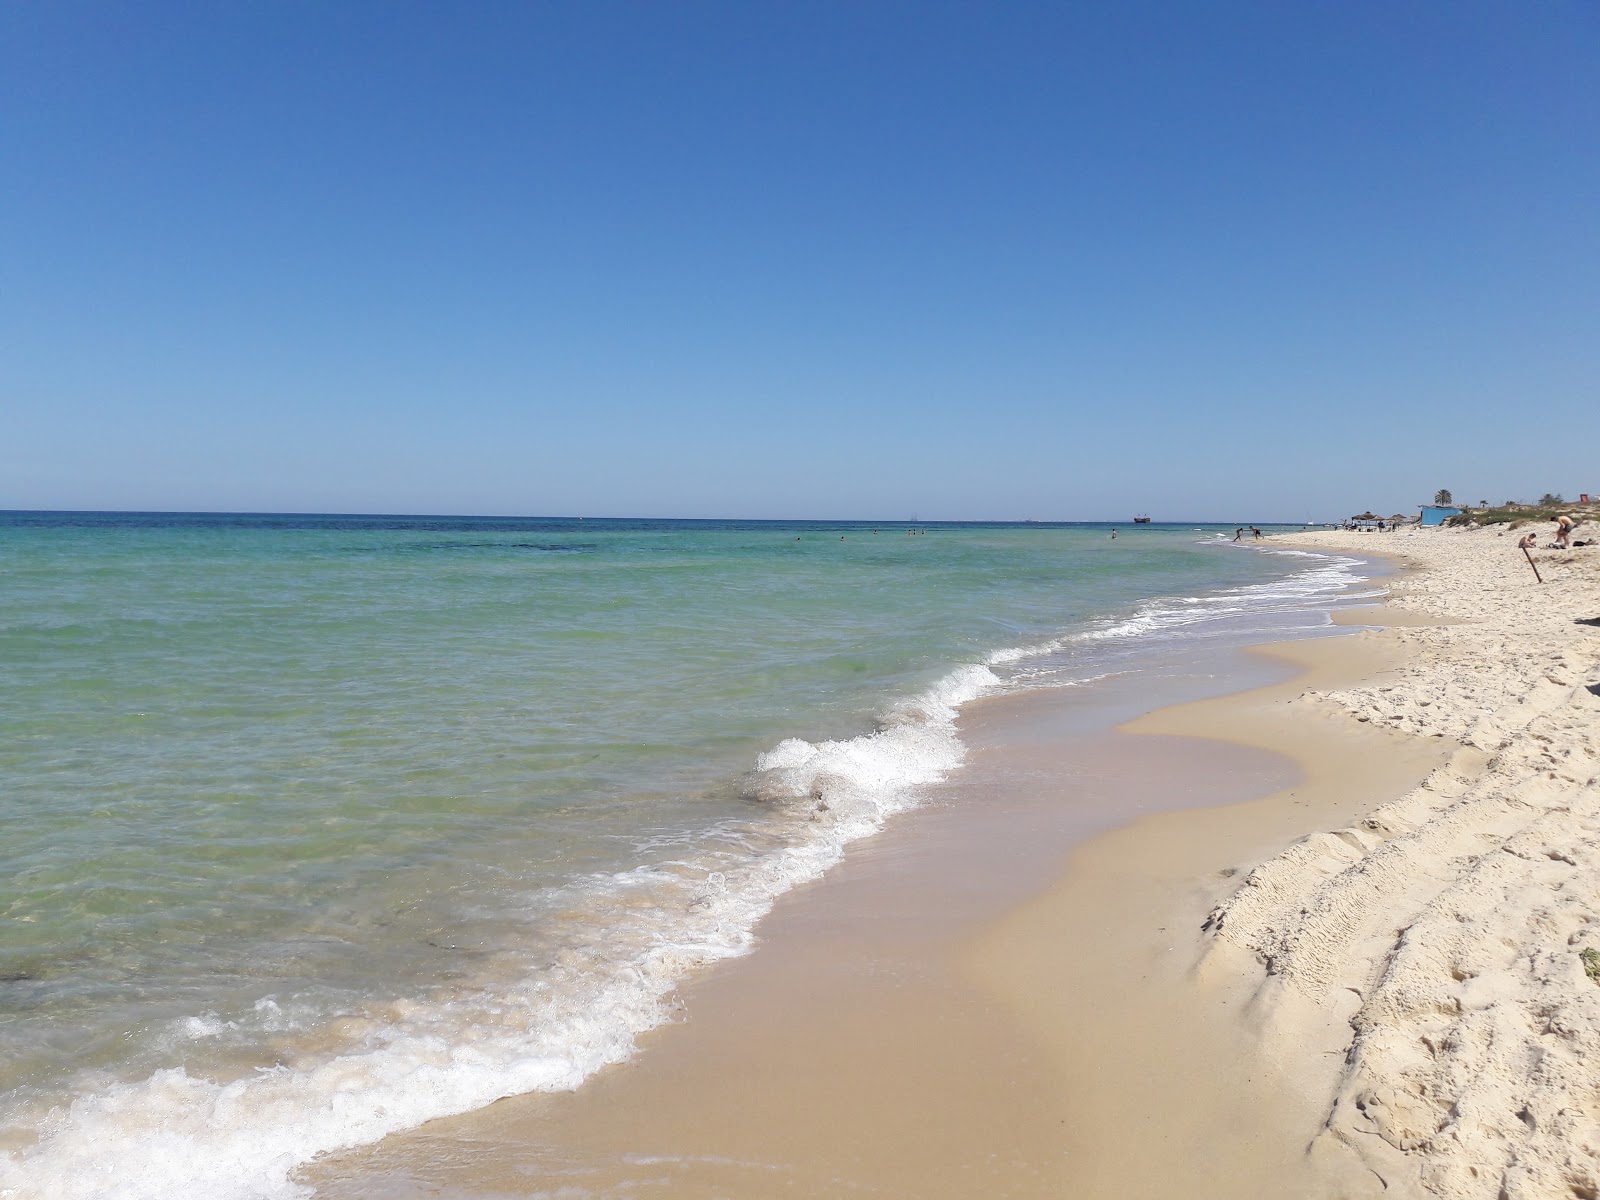 Foto di El Menchia beach con una superficie del sabbia pura bianca